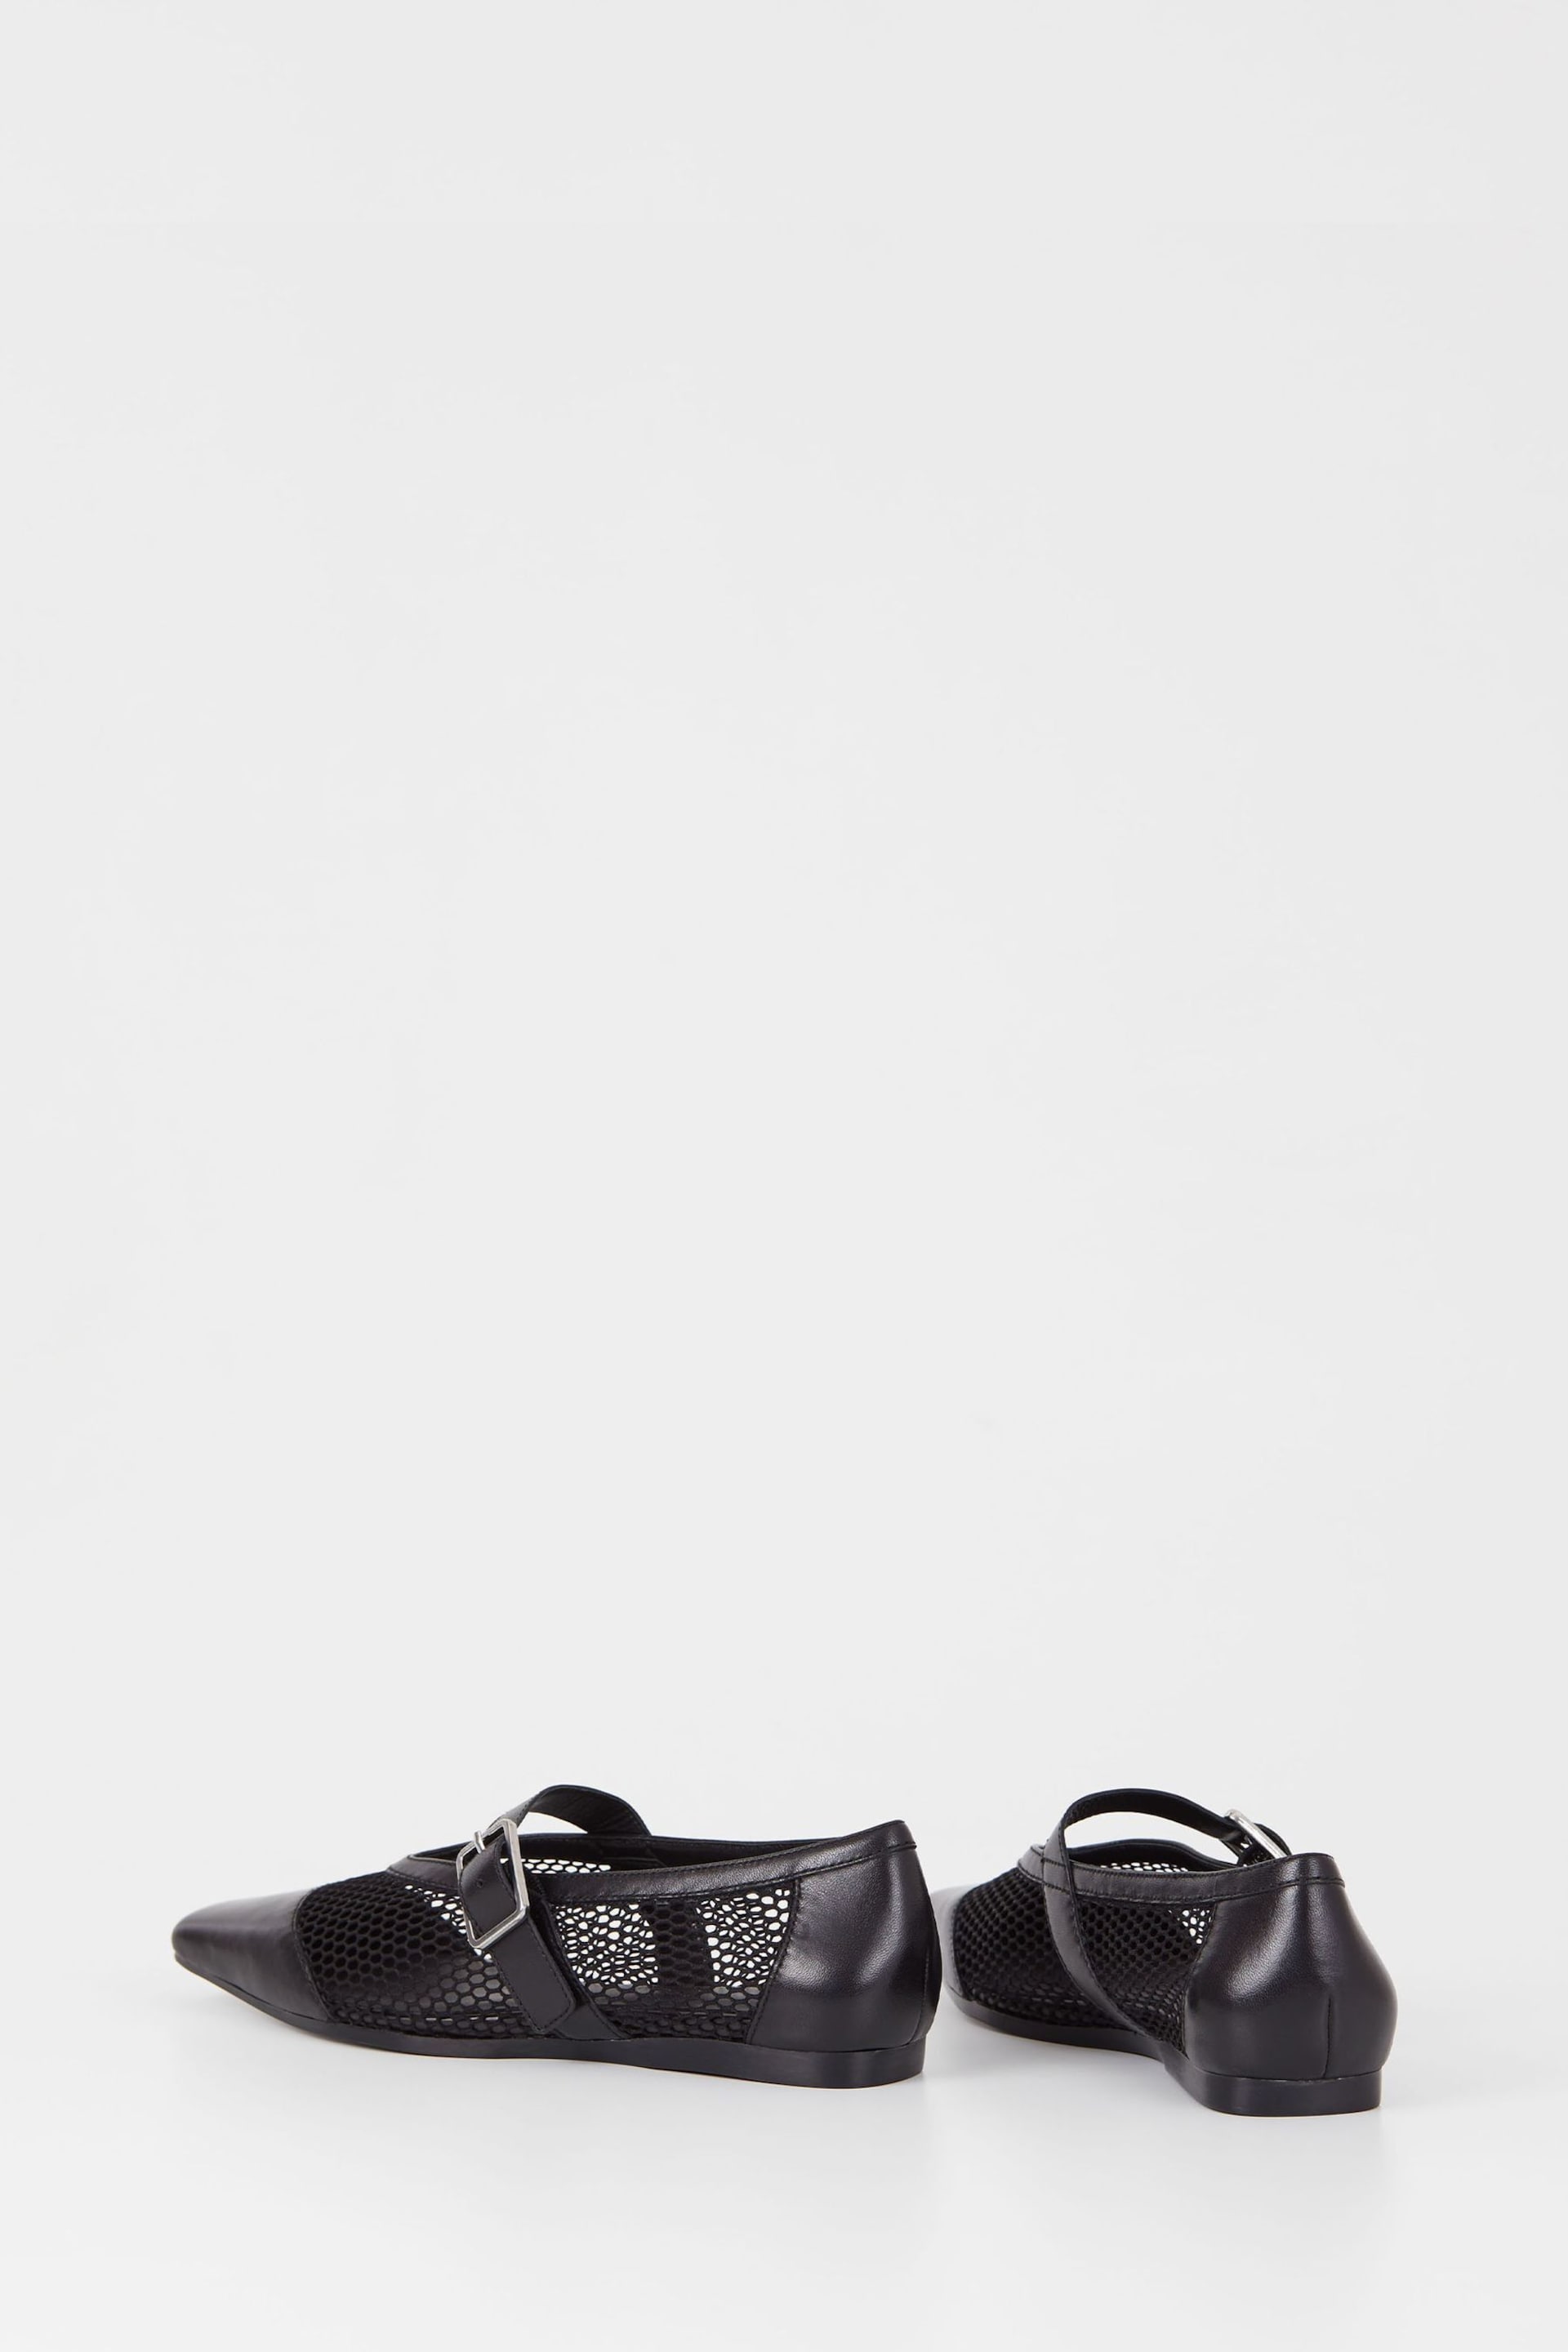 Vagabond Shoemakers Wioletta Leather/Mesh Mary Jane White Shoes - Image 3 of 3